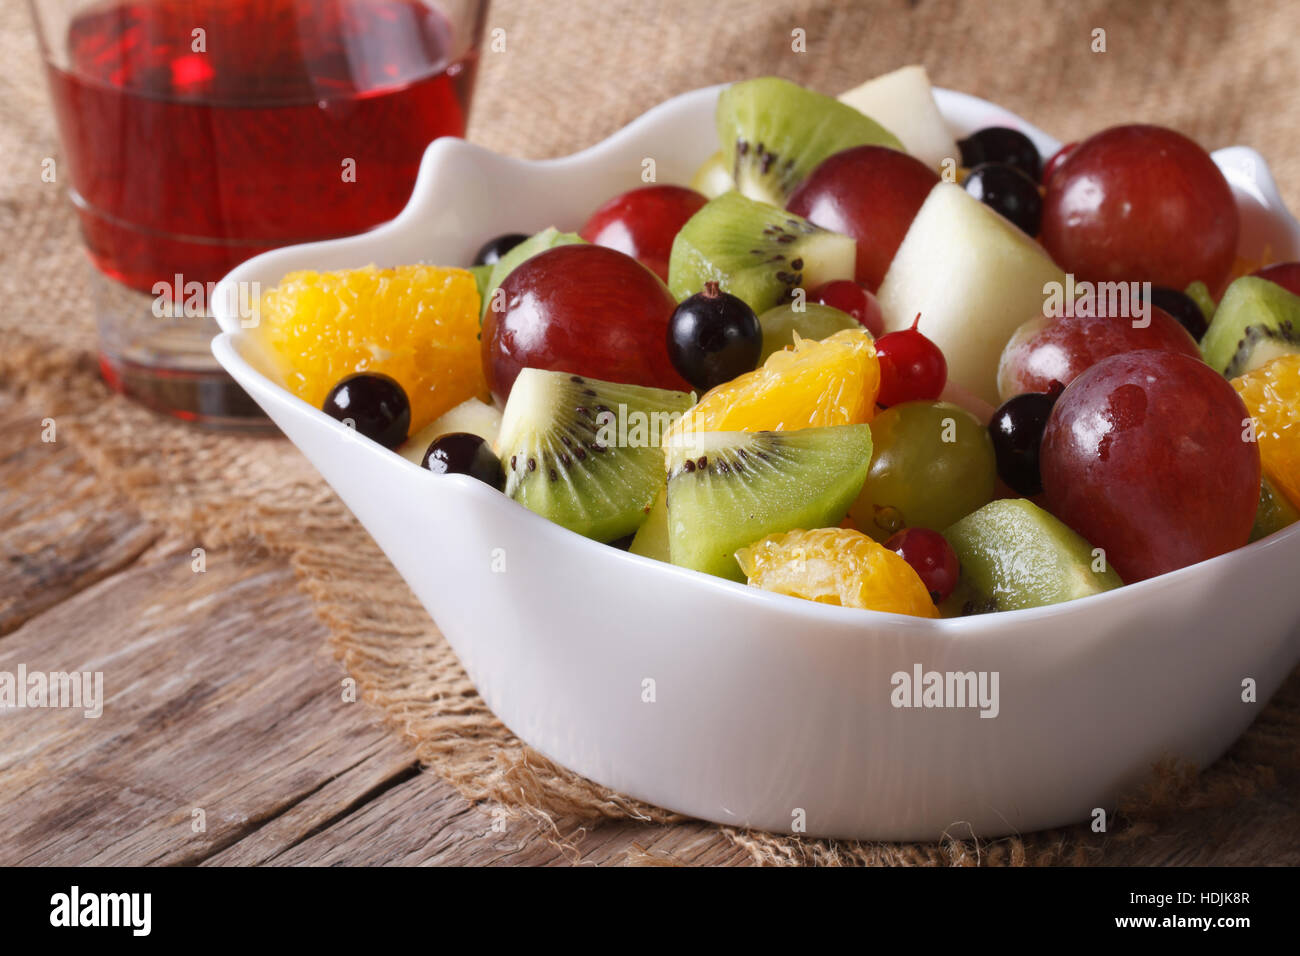 Fruit salad of oranges, grapes. pears, kiwis in a white bowl and grape juice closeup. horizontal Stock Photo